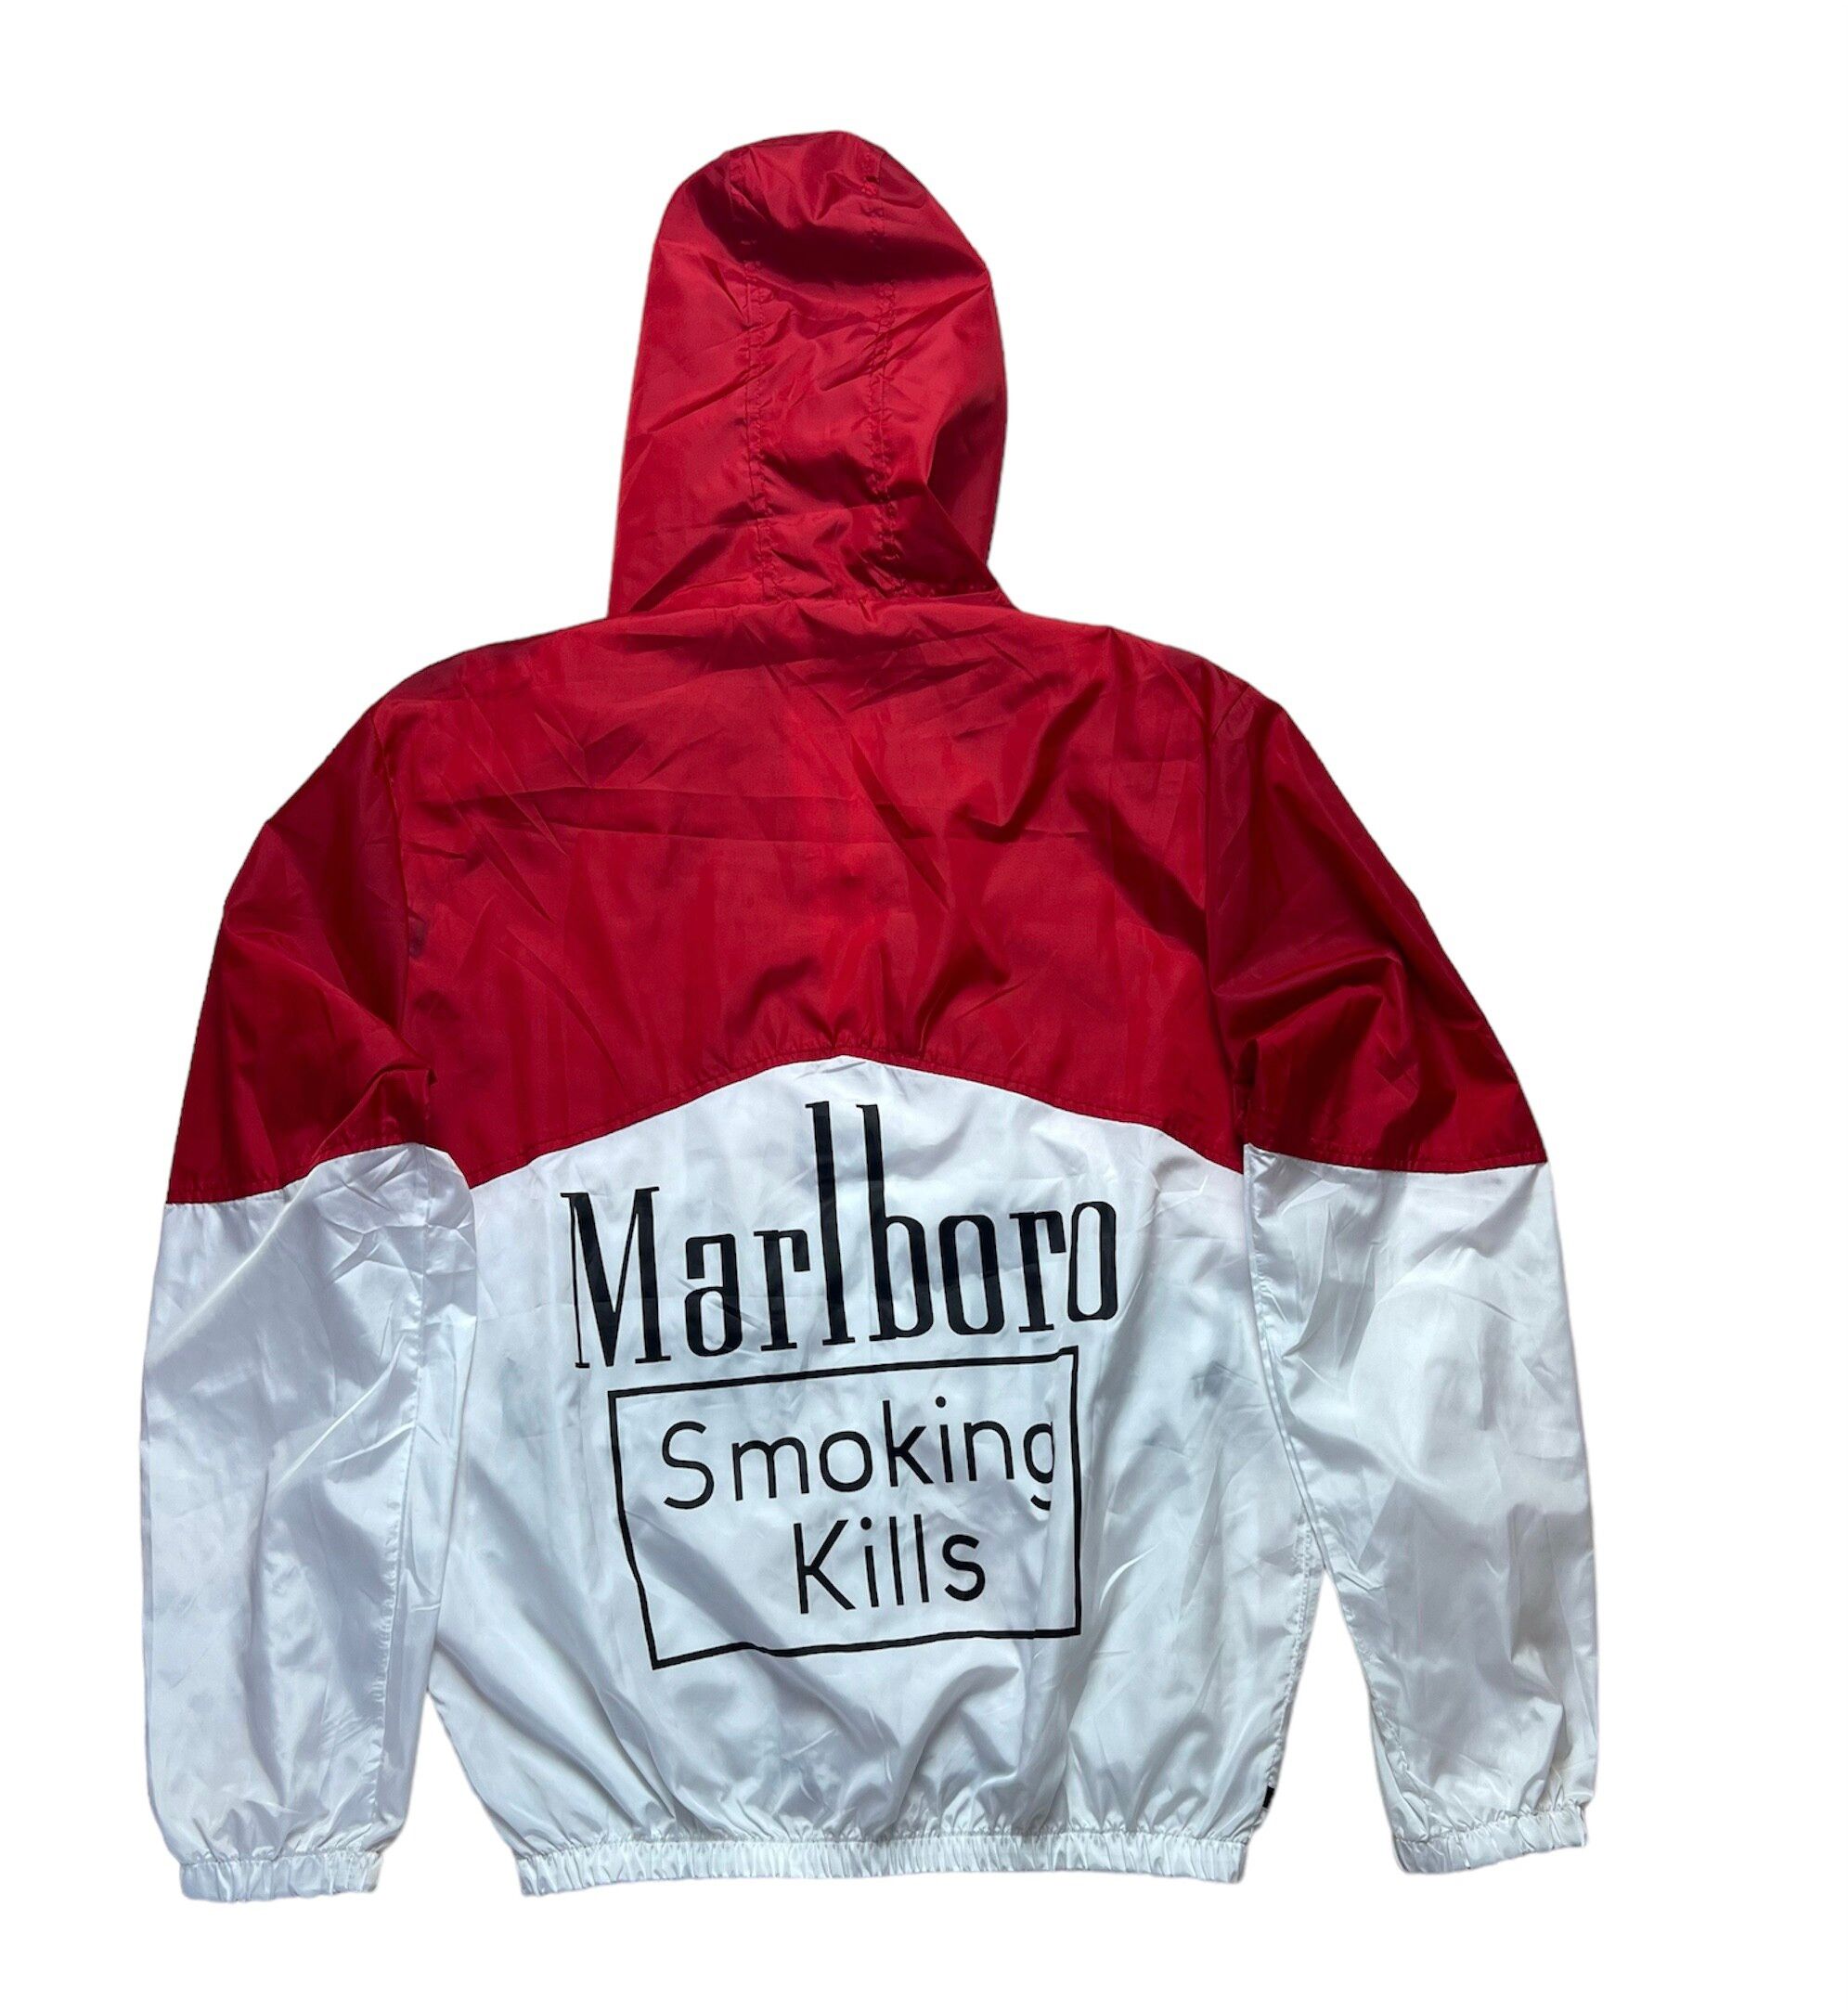 Marlboro Marlboro Smoking Kills Jacket Light 💥🔥 Size US S / EU 44-46 / 1 - 2 Preview